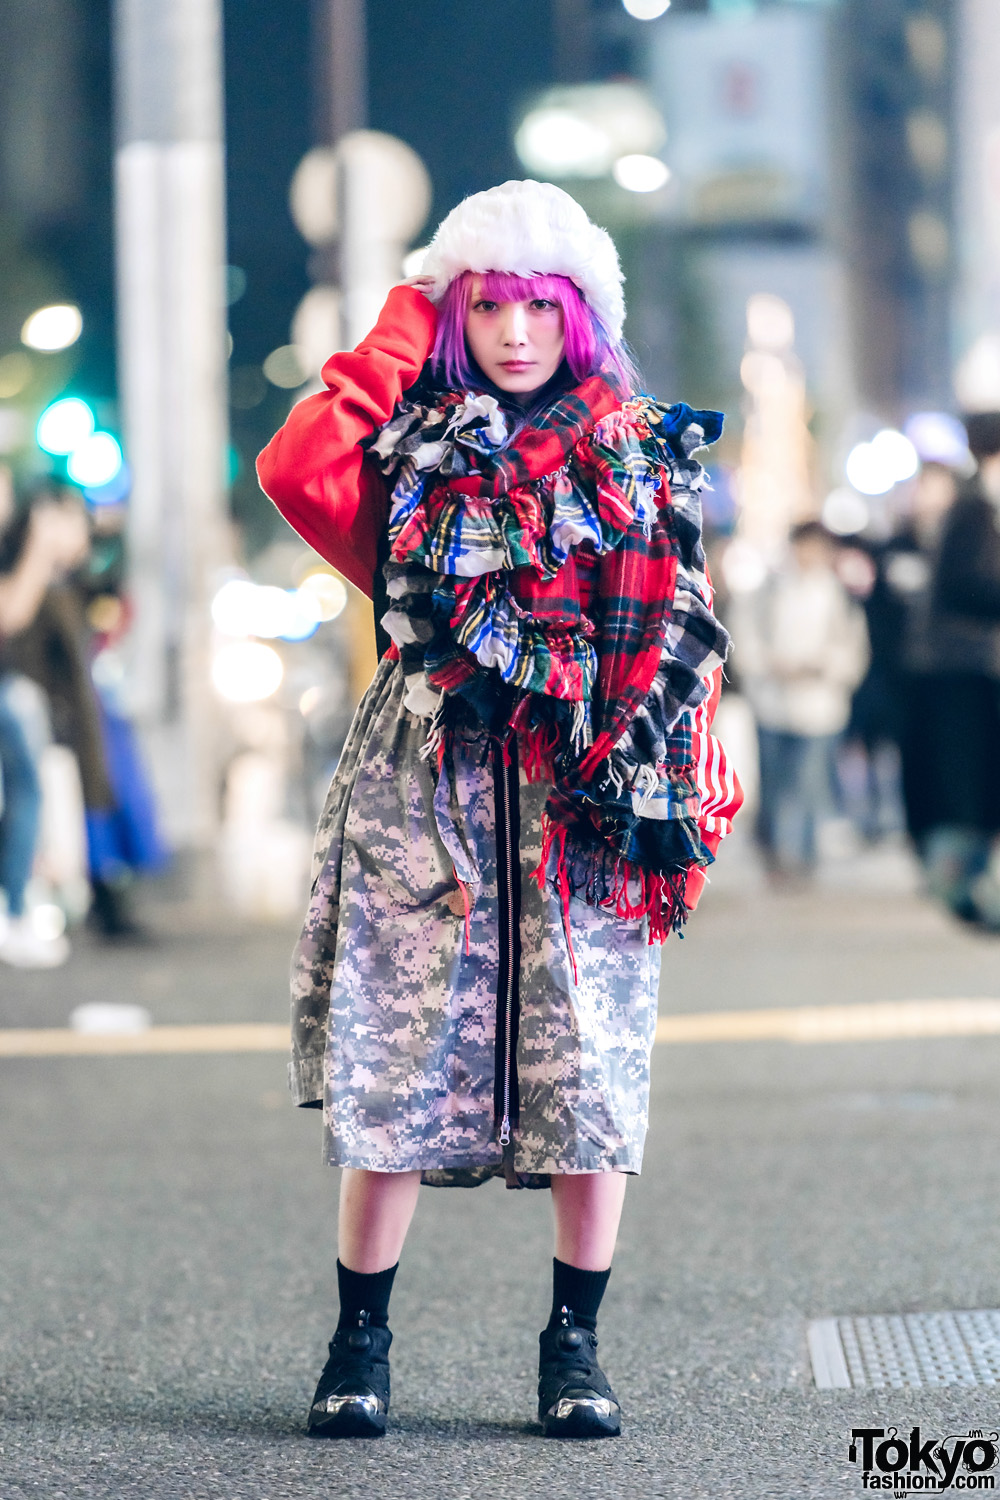 Pink-Haired Harajuku Girl in Mixed Prints w/ Nincompoop Capacity & Moschino